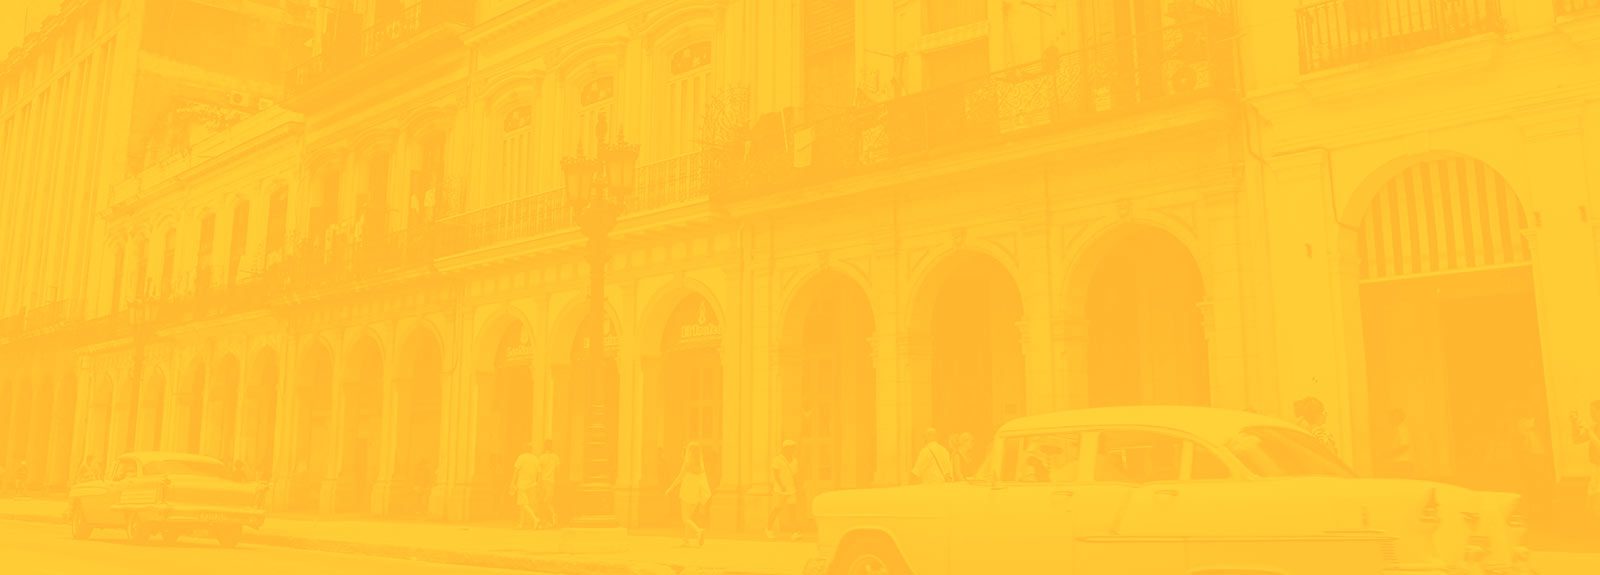 Yellow background image with Cuba street scene